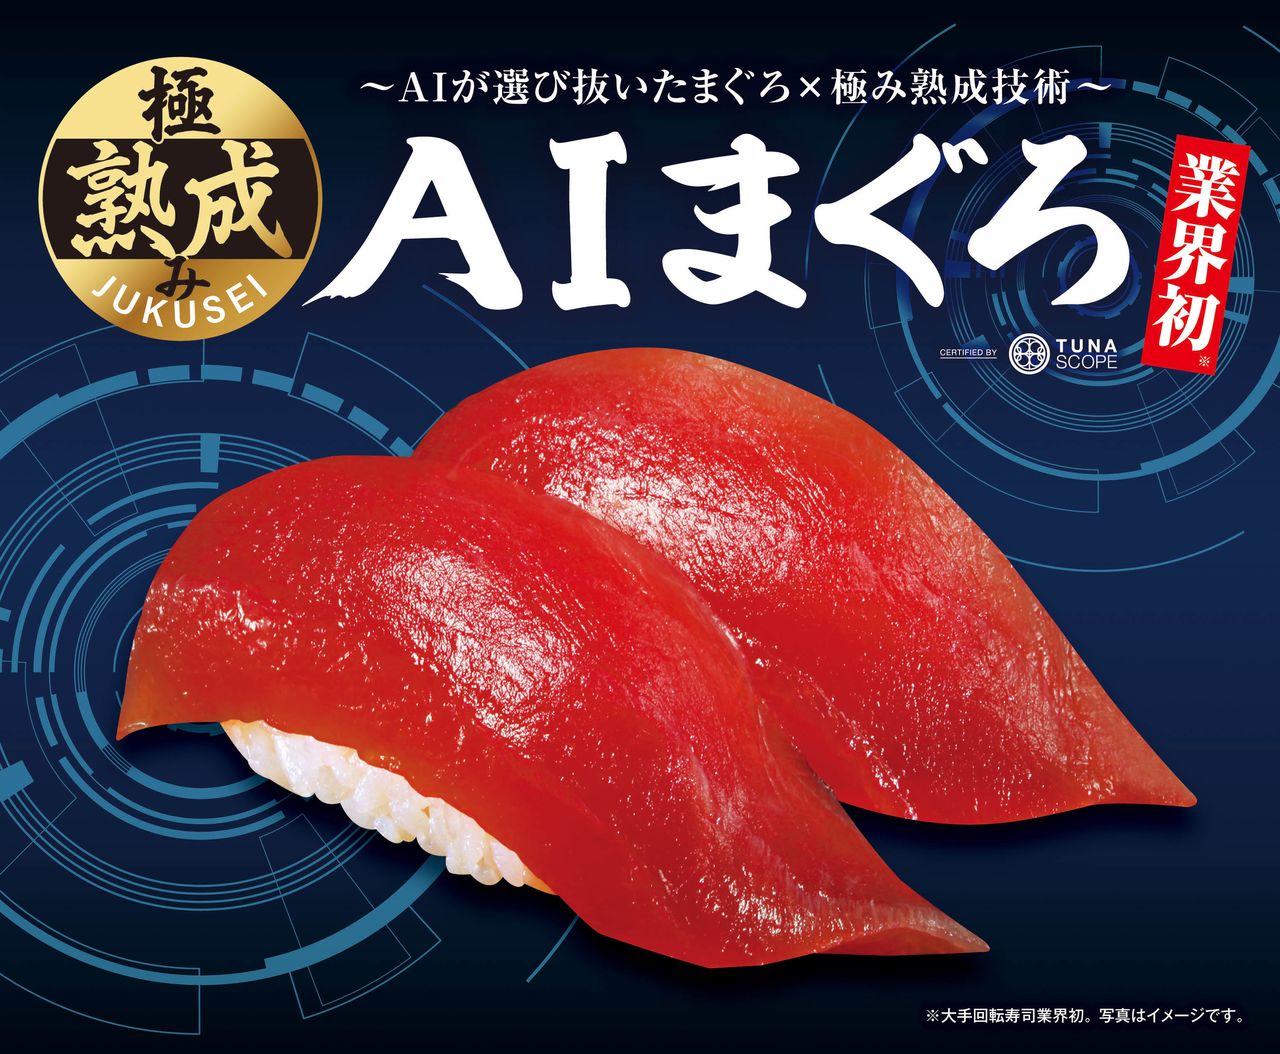 The AI-graded tuna sushi was available at Kura Sushi in summer and fall 2020. (Photo courtesy of Kura Sushi)